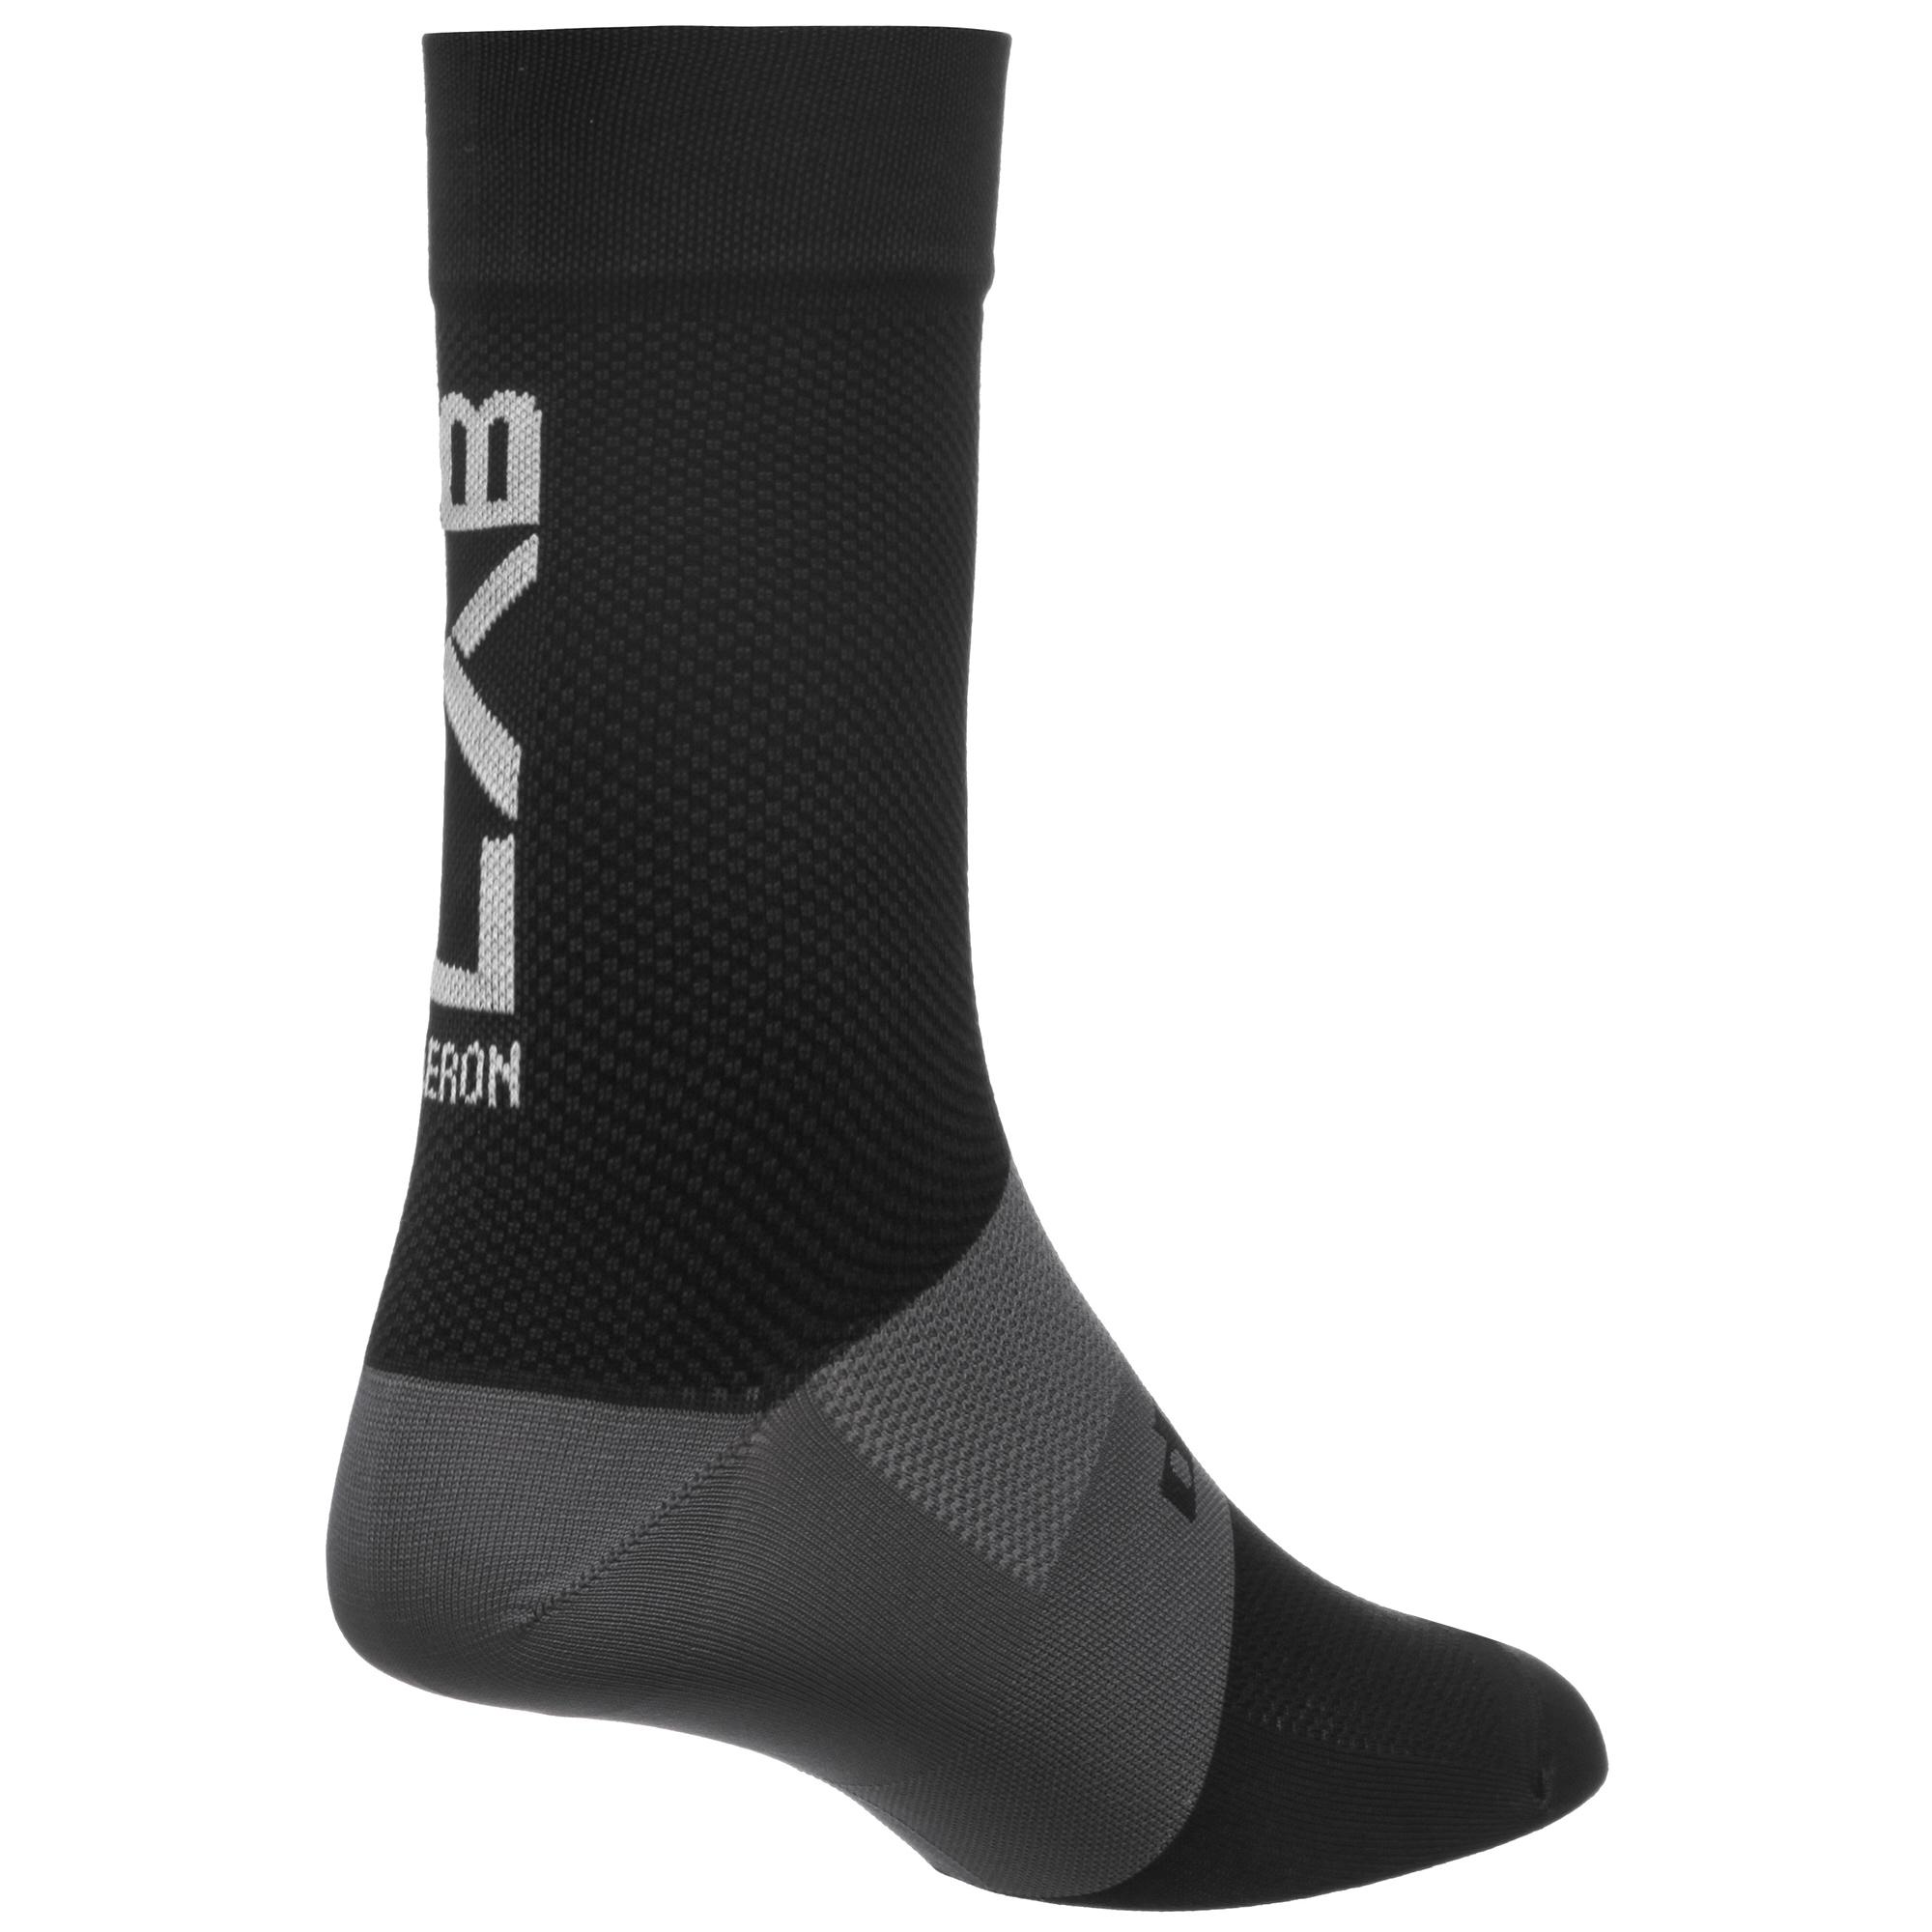 Dhb Aeron Lab Sock - Black/grey